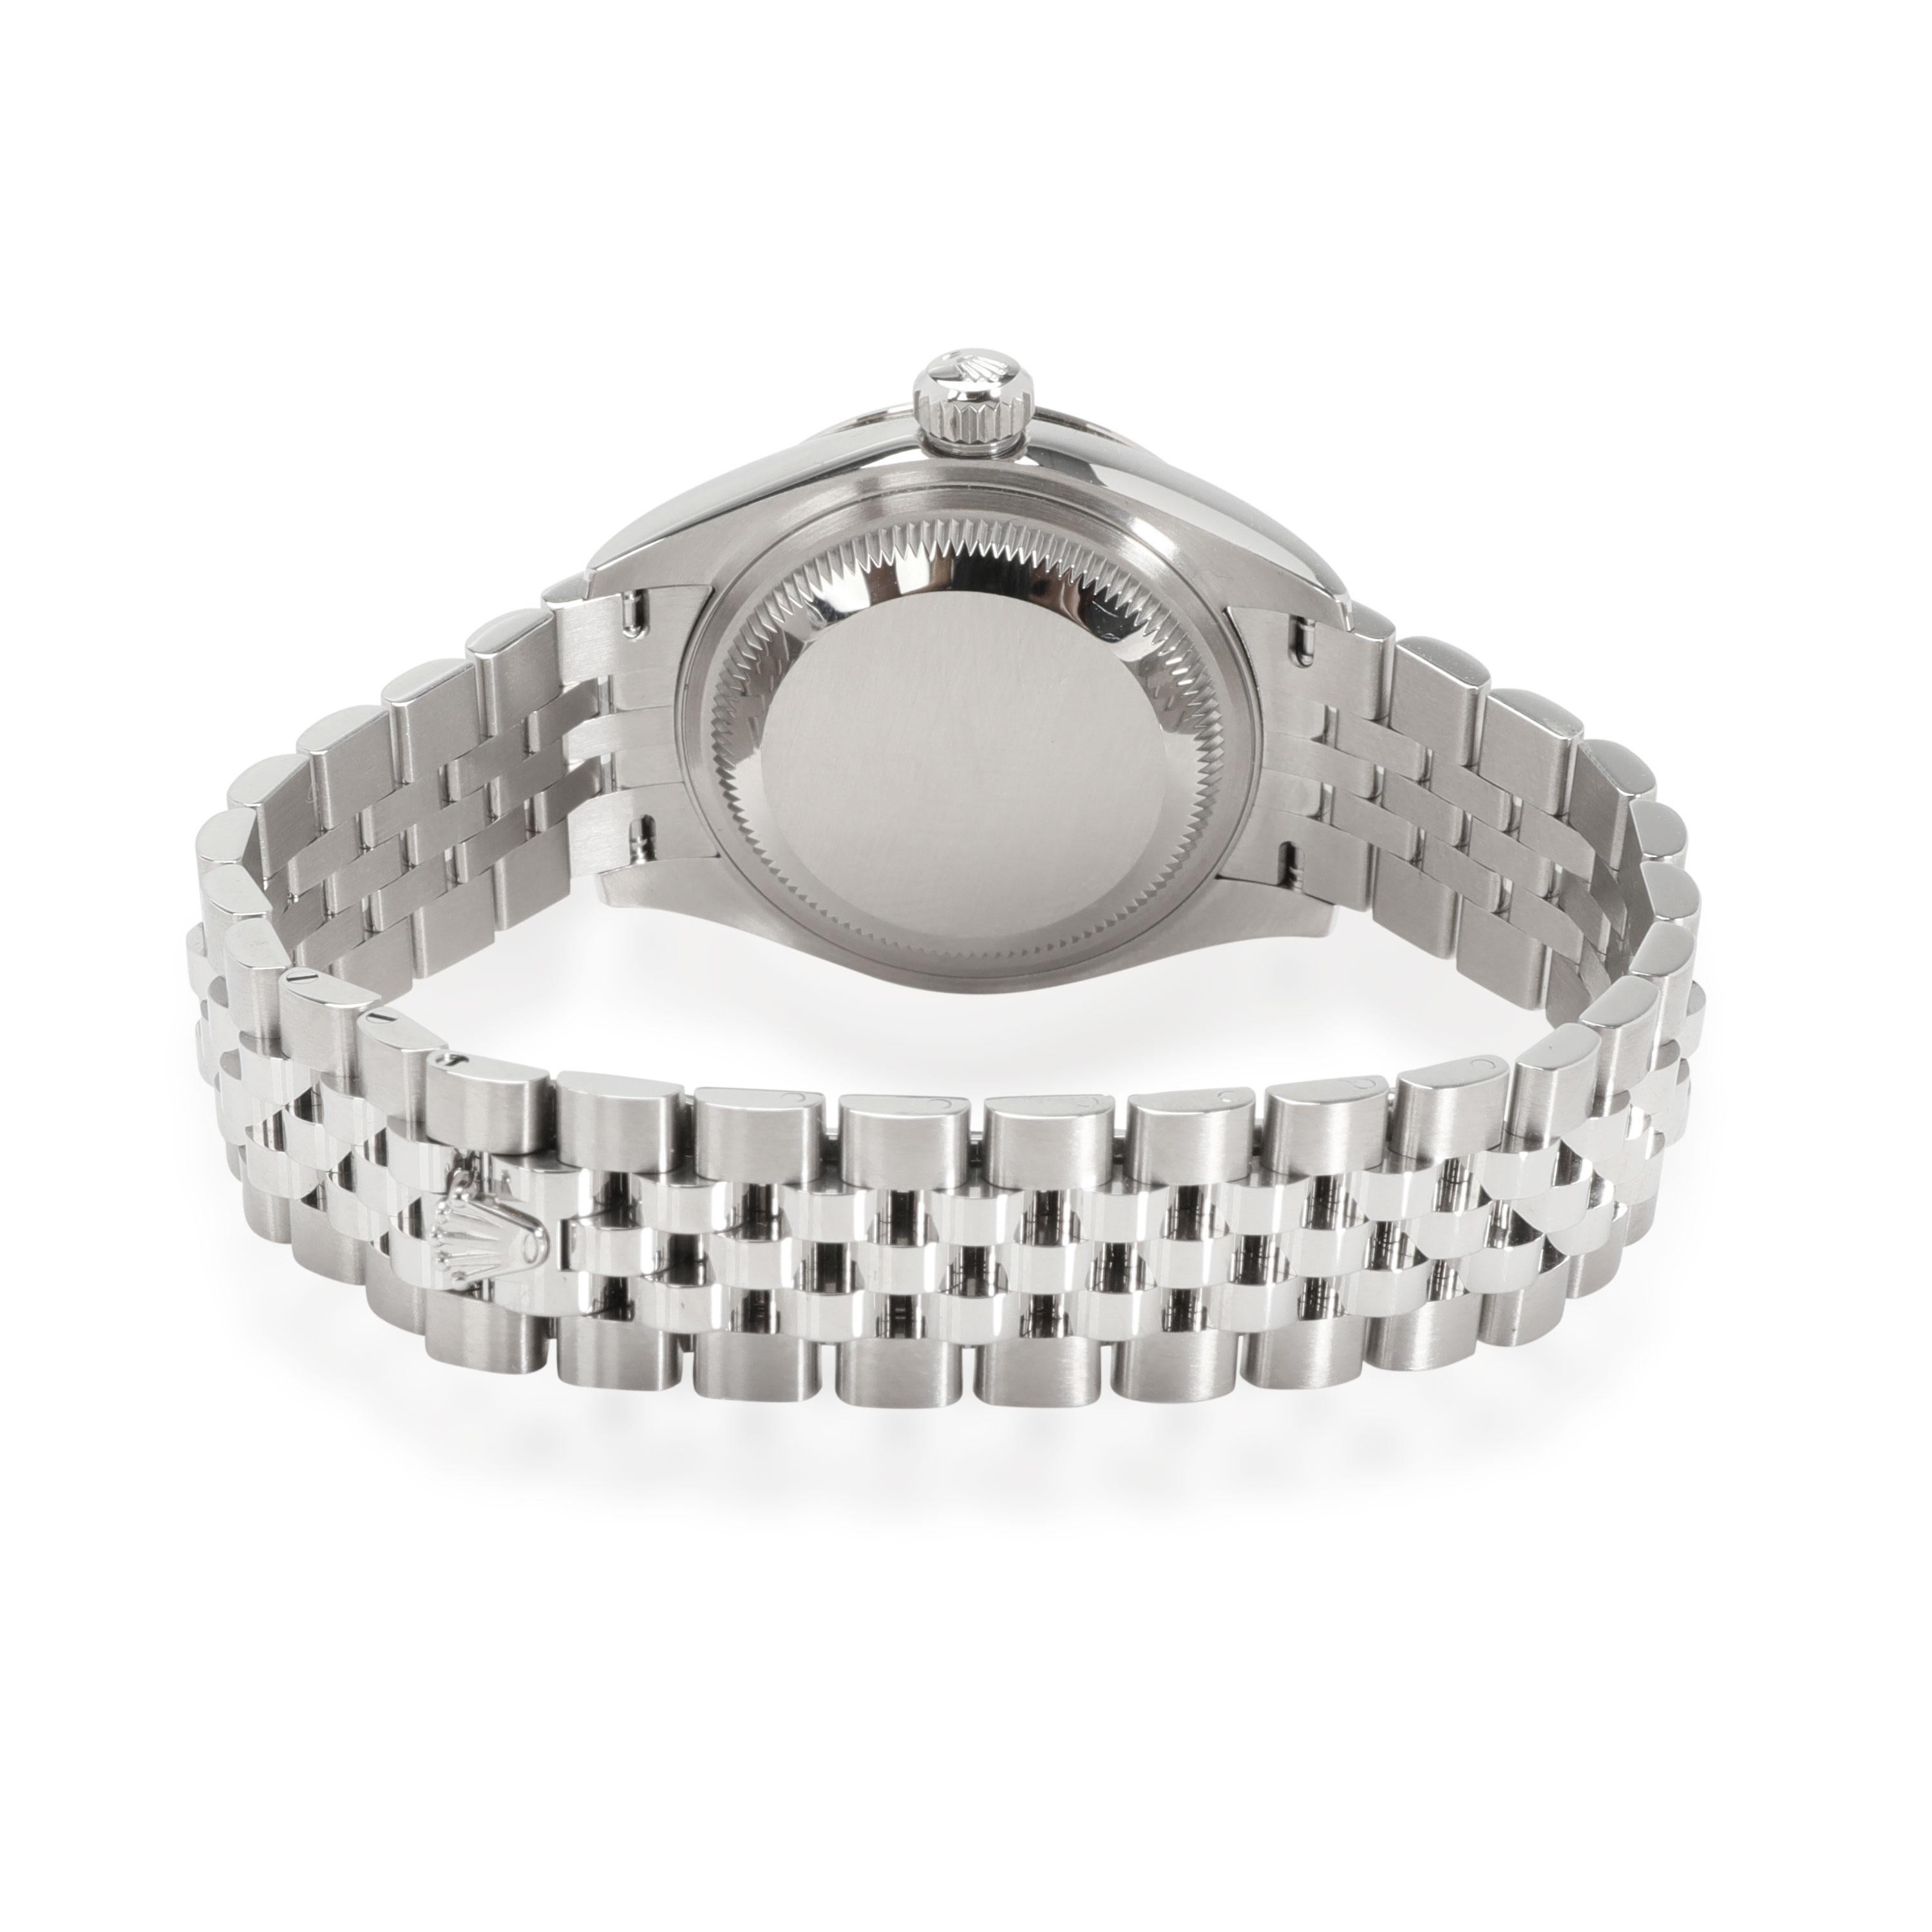 Rolex Datejust 28 279174 Women's Watch in 18kt Stainless Steel/White Gold
